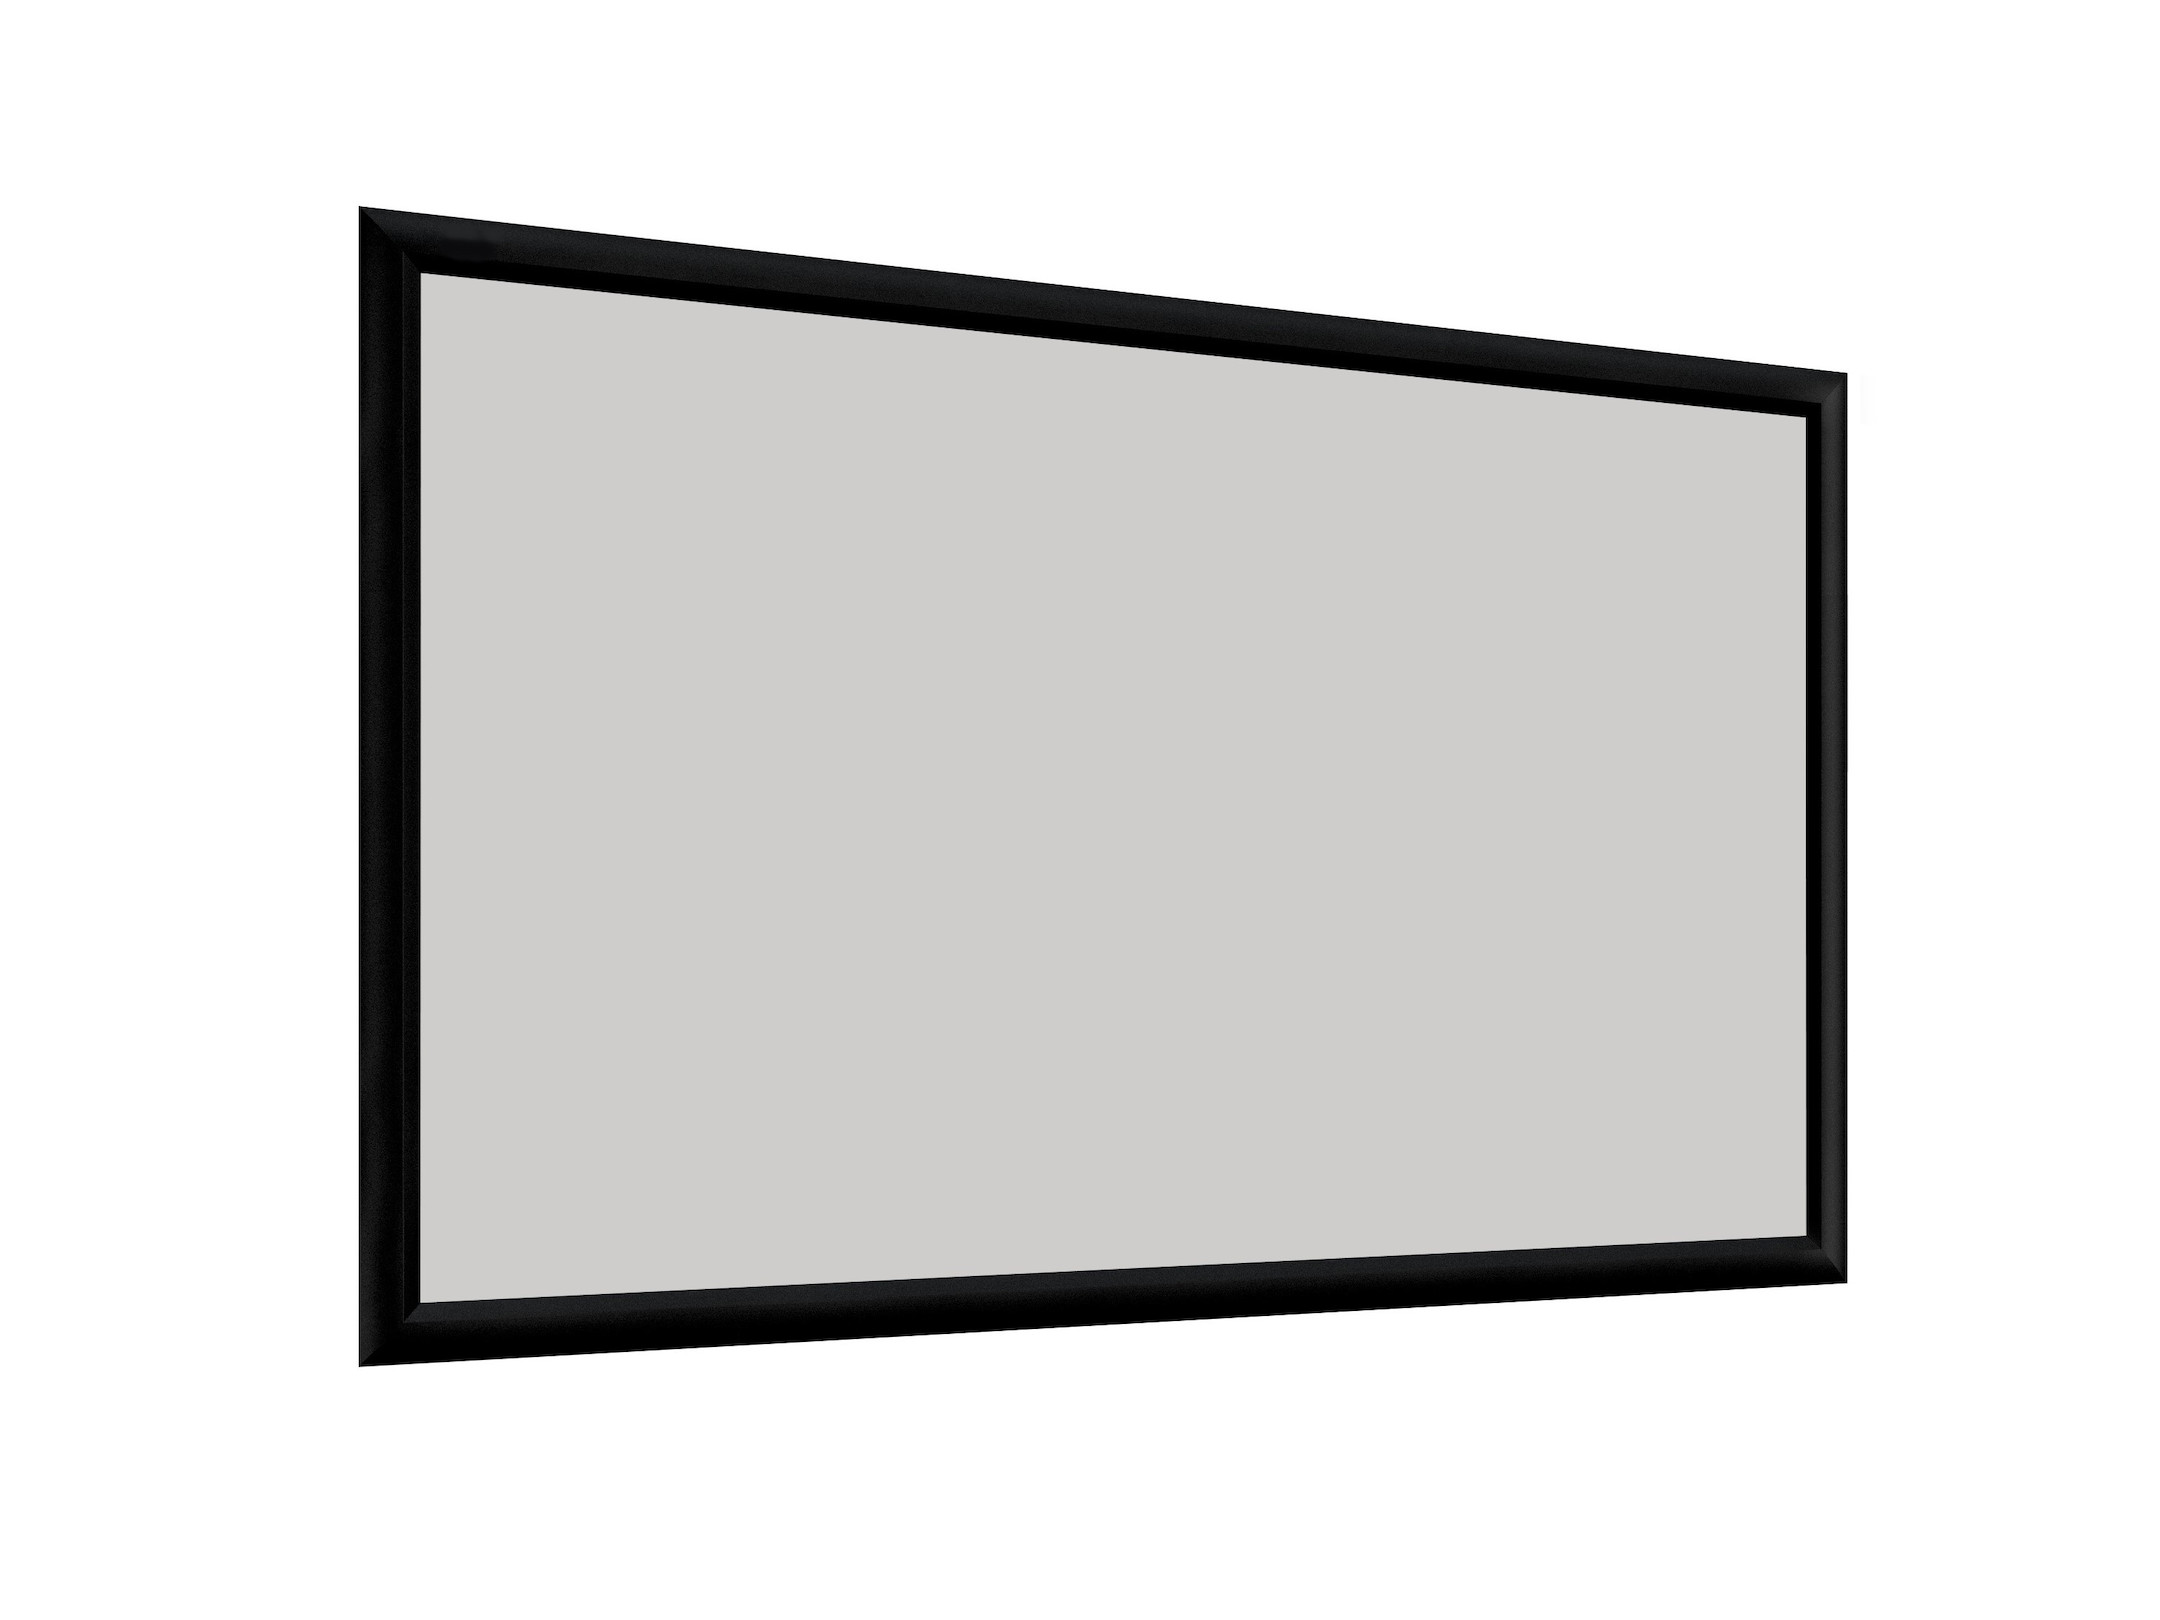 DELUXX-Cinema-Hoogcontrast-frame-projectiescherm-244-x-137-cm-110-DAYVISION-ALR